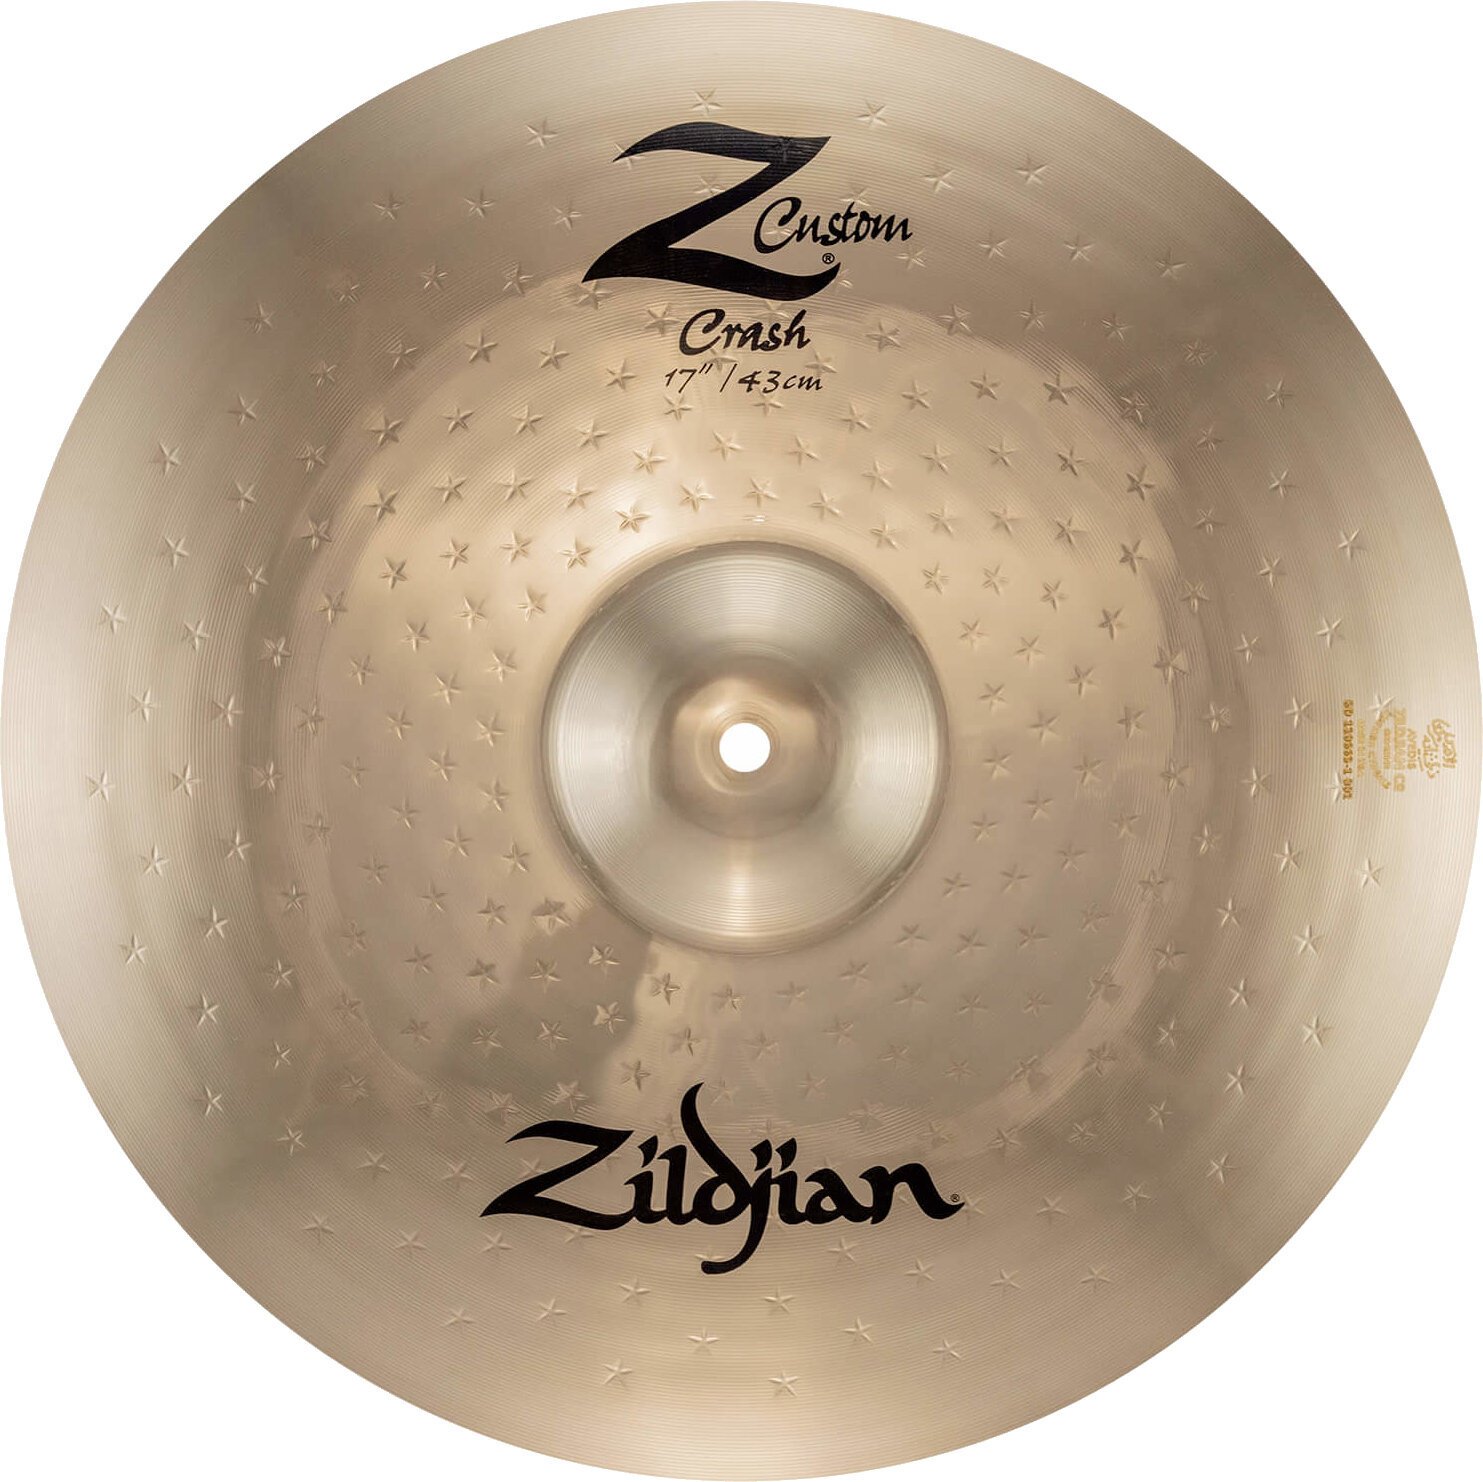 Cymbale crash Zildjian Z Custom Cymbale crash 17"